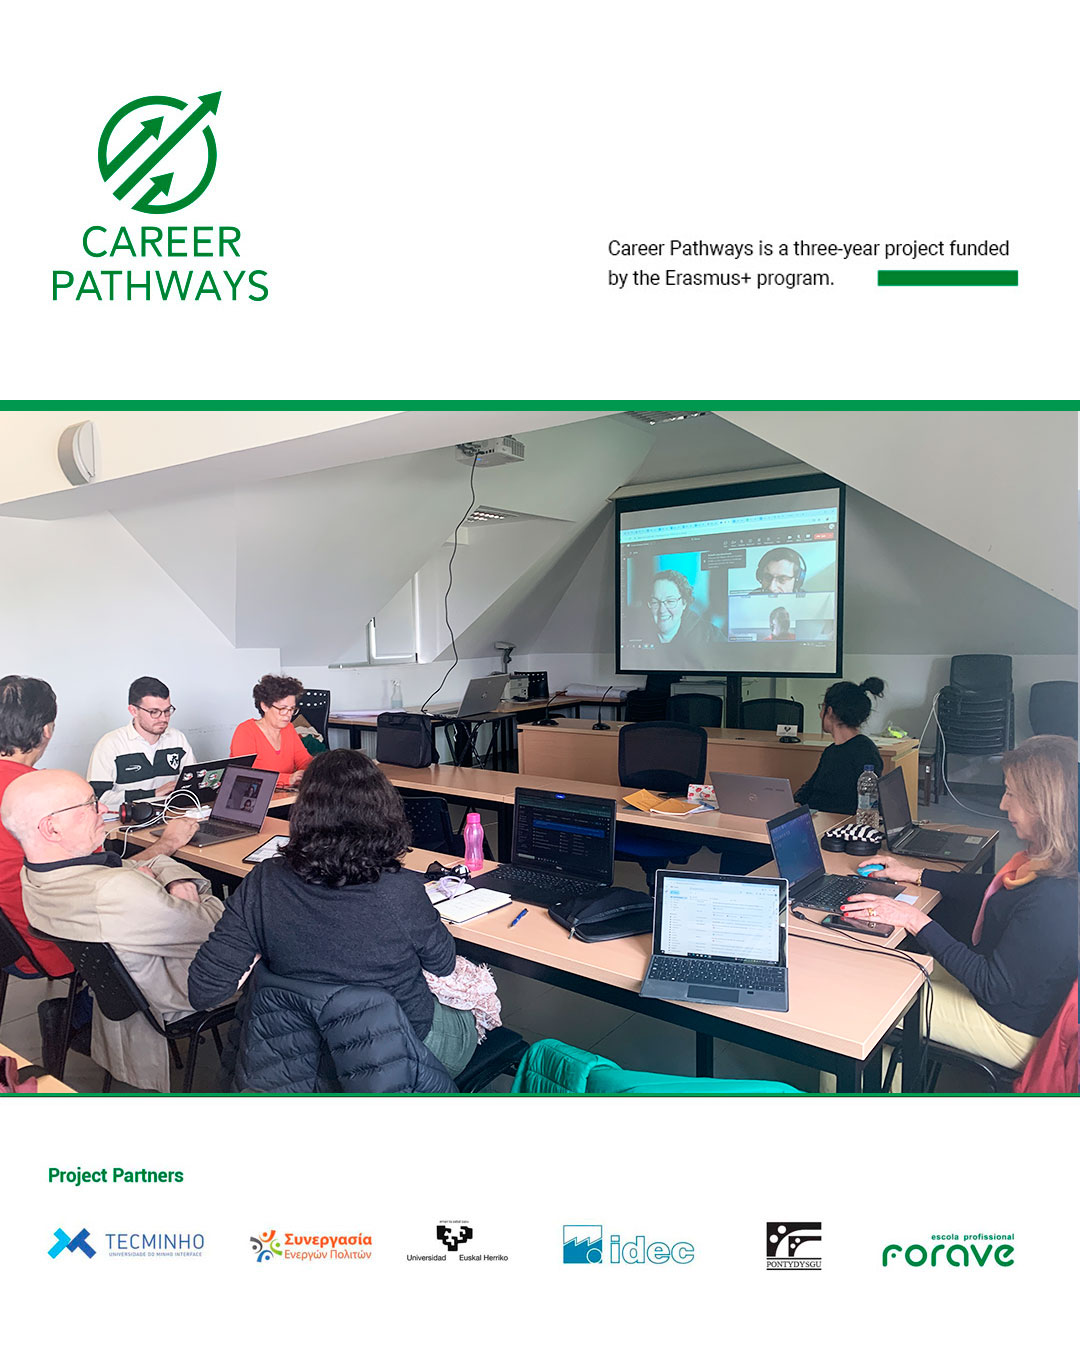 Career-pathways-project-meeting-Bilbao-011